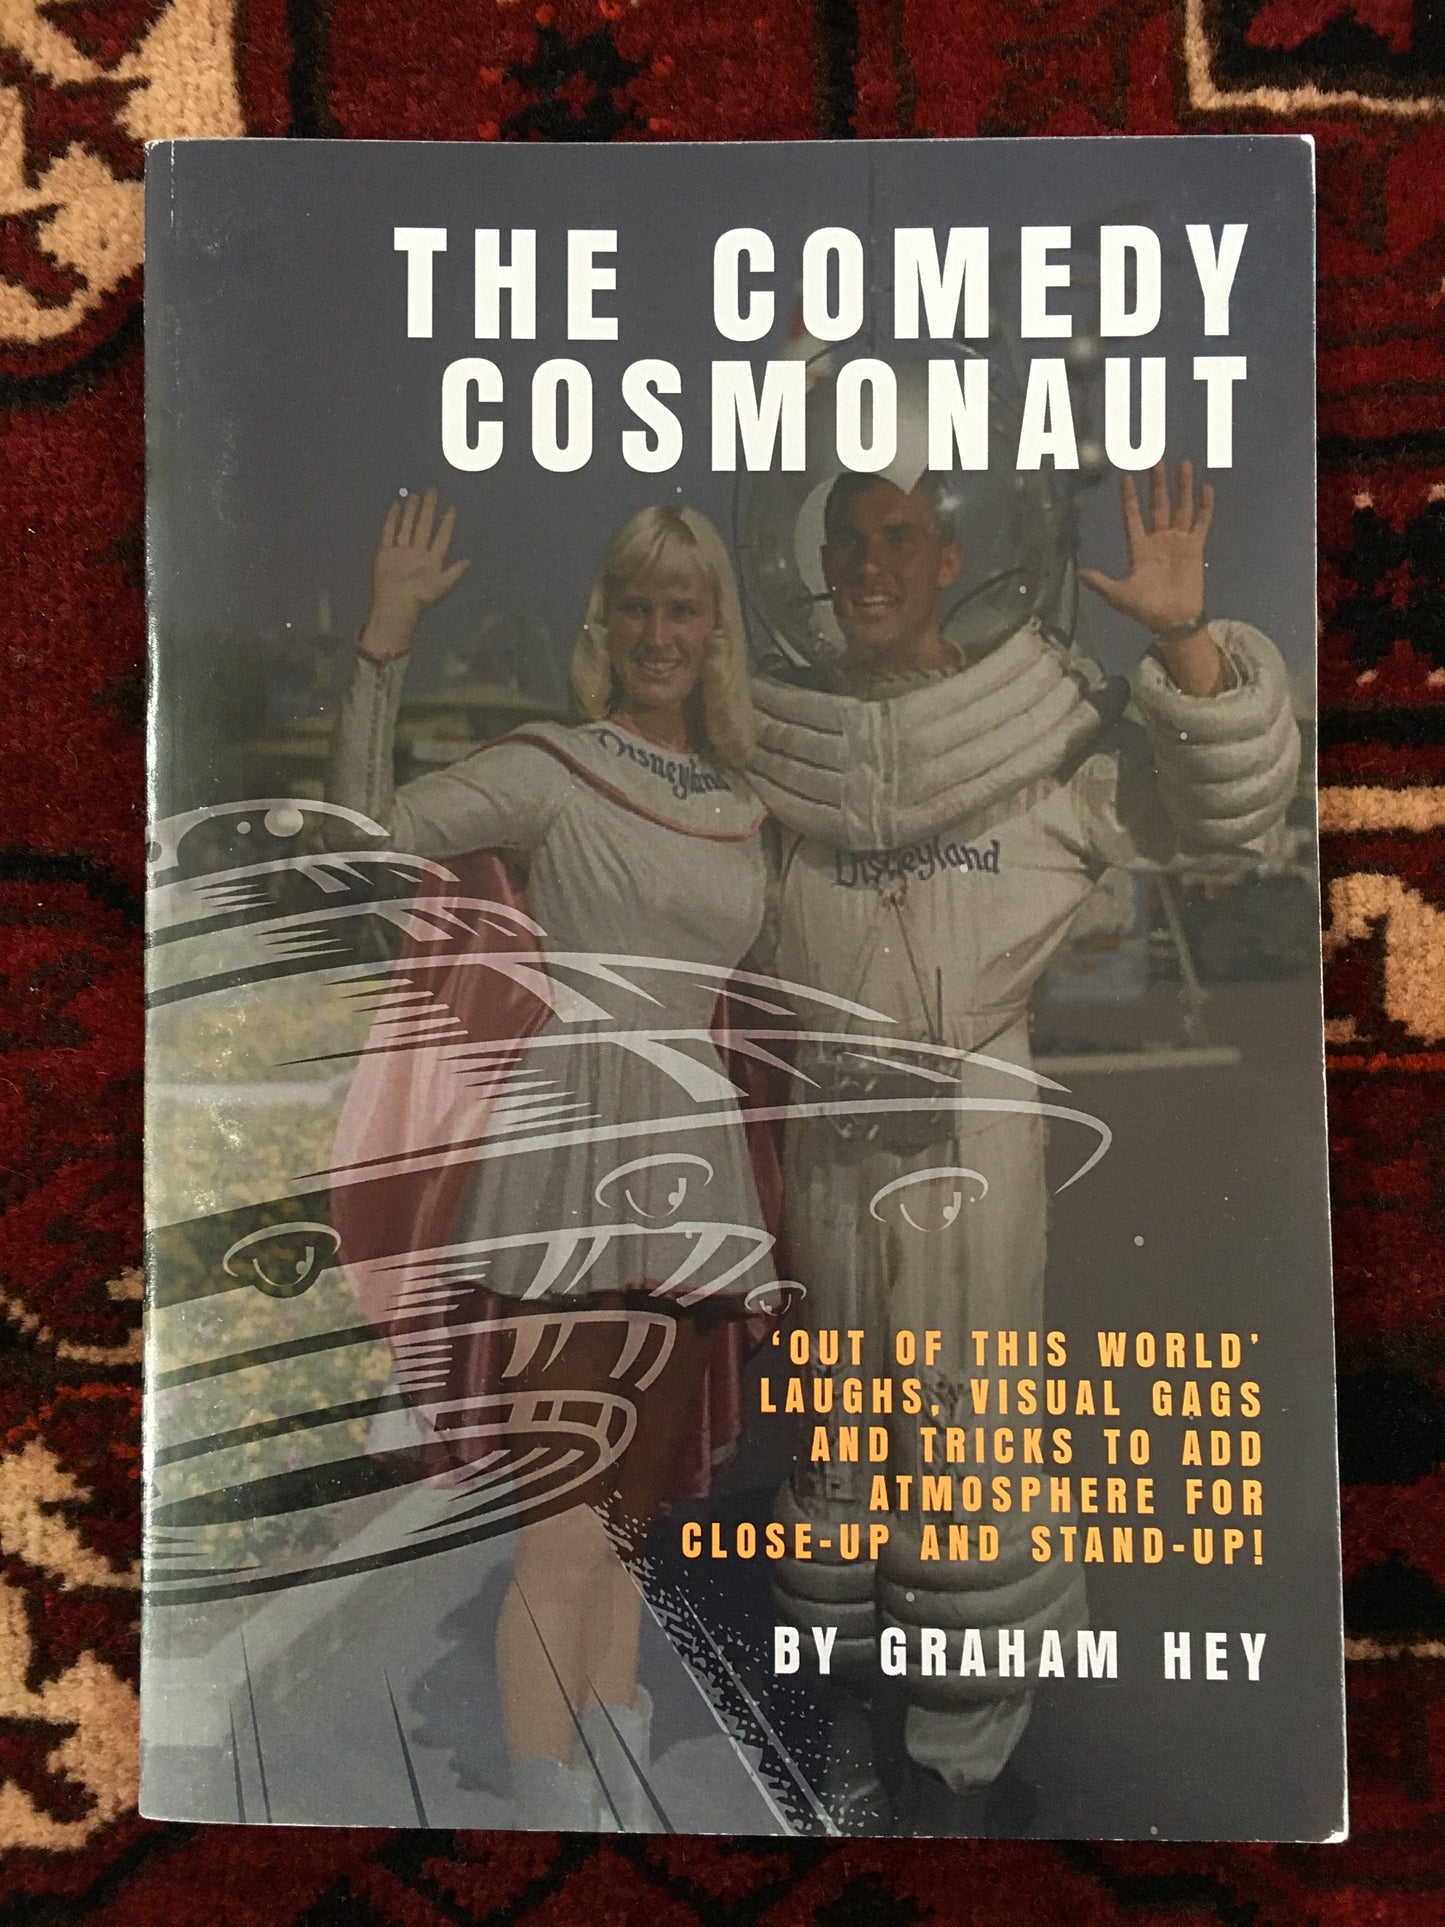 The Comedy Cosmonaut (book) - Graham Hey